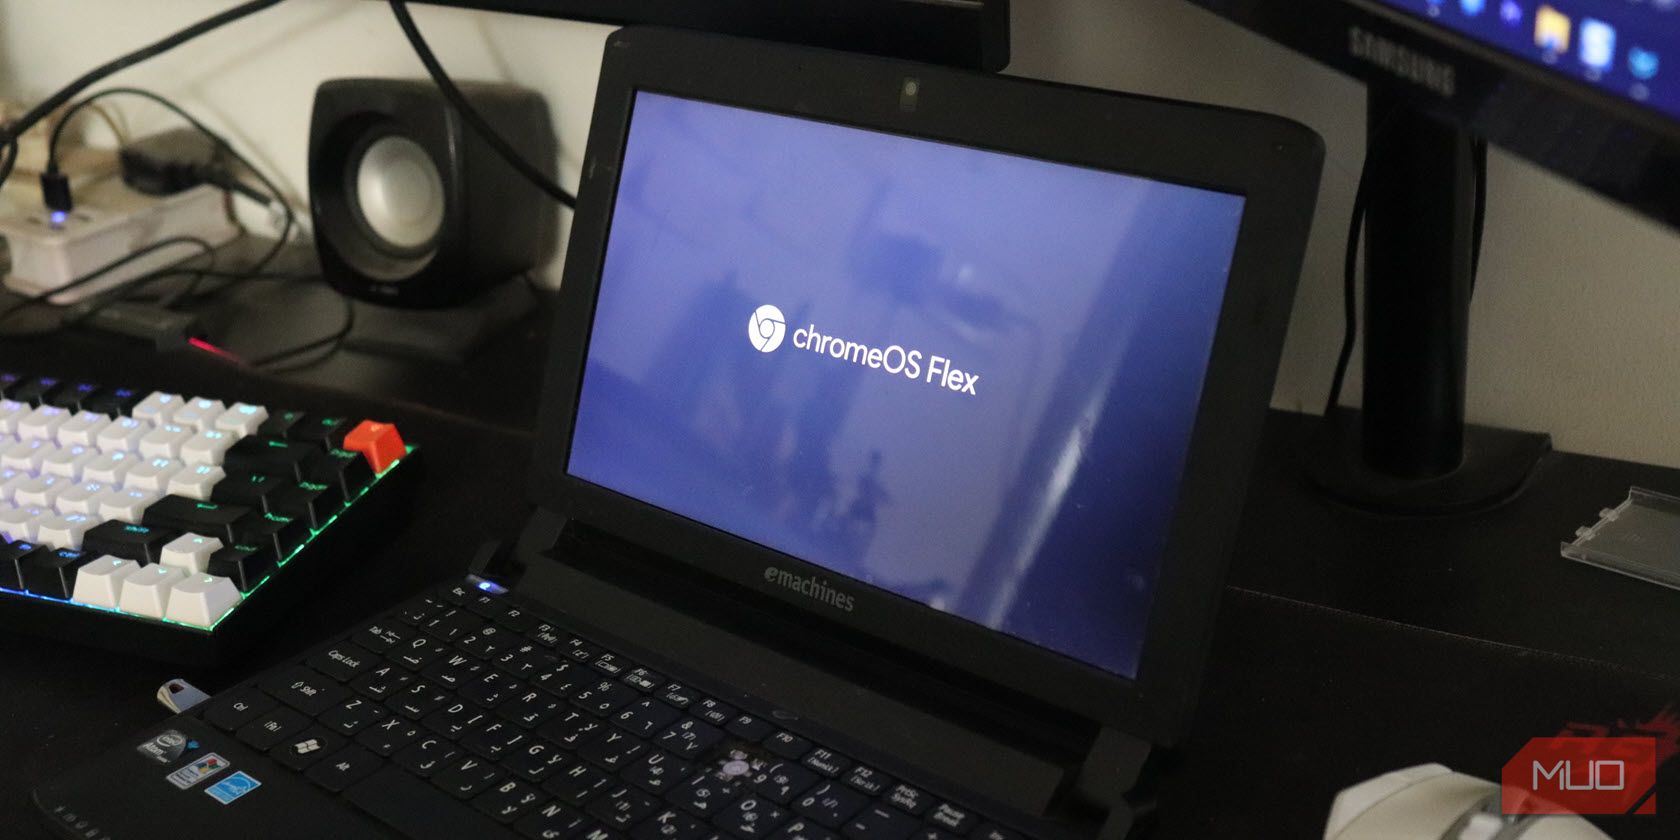 Image showing netbook running ChromeOS Flex